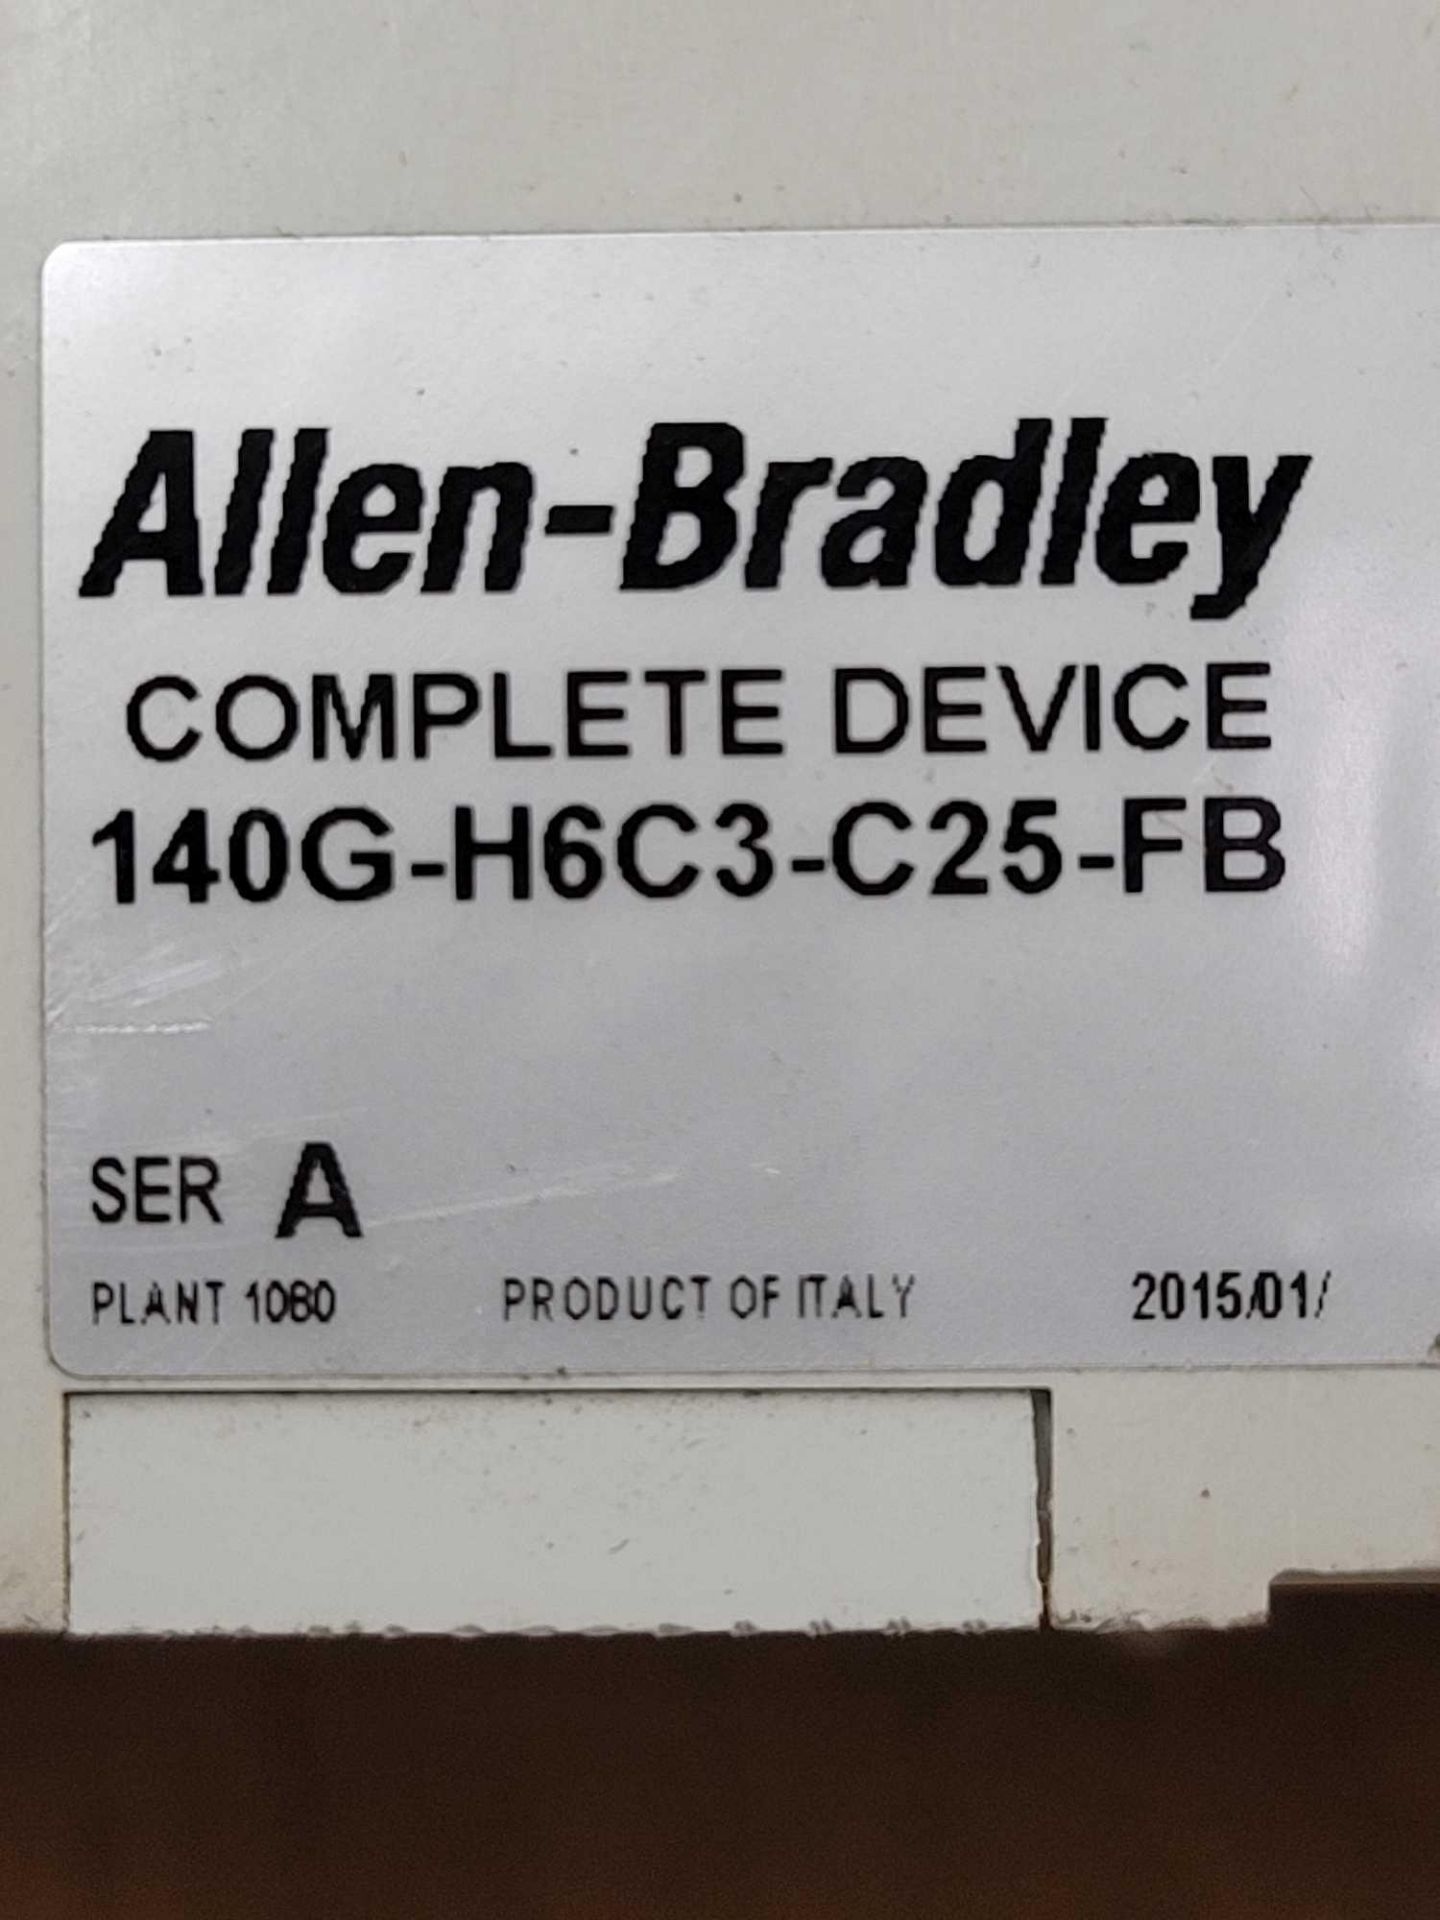 LOT OF 3 ALLEN BRADLEY 140G-H6C3-C25-FB / Series 25 Amp Circuit Breaker  /  Lot Weight: 13.0 lbs - Image 7 of 8